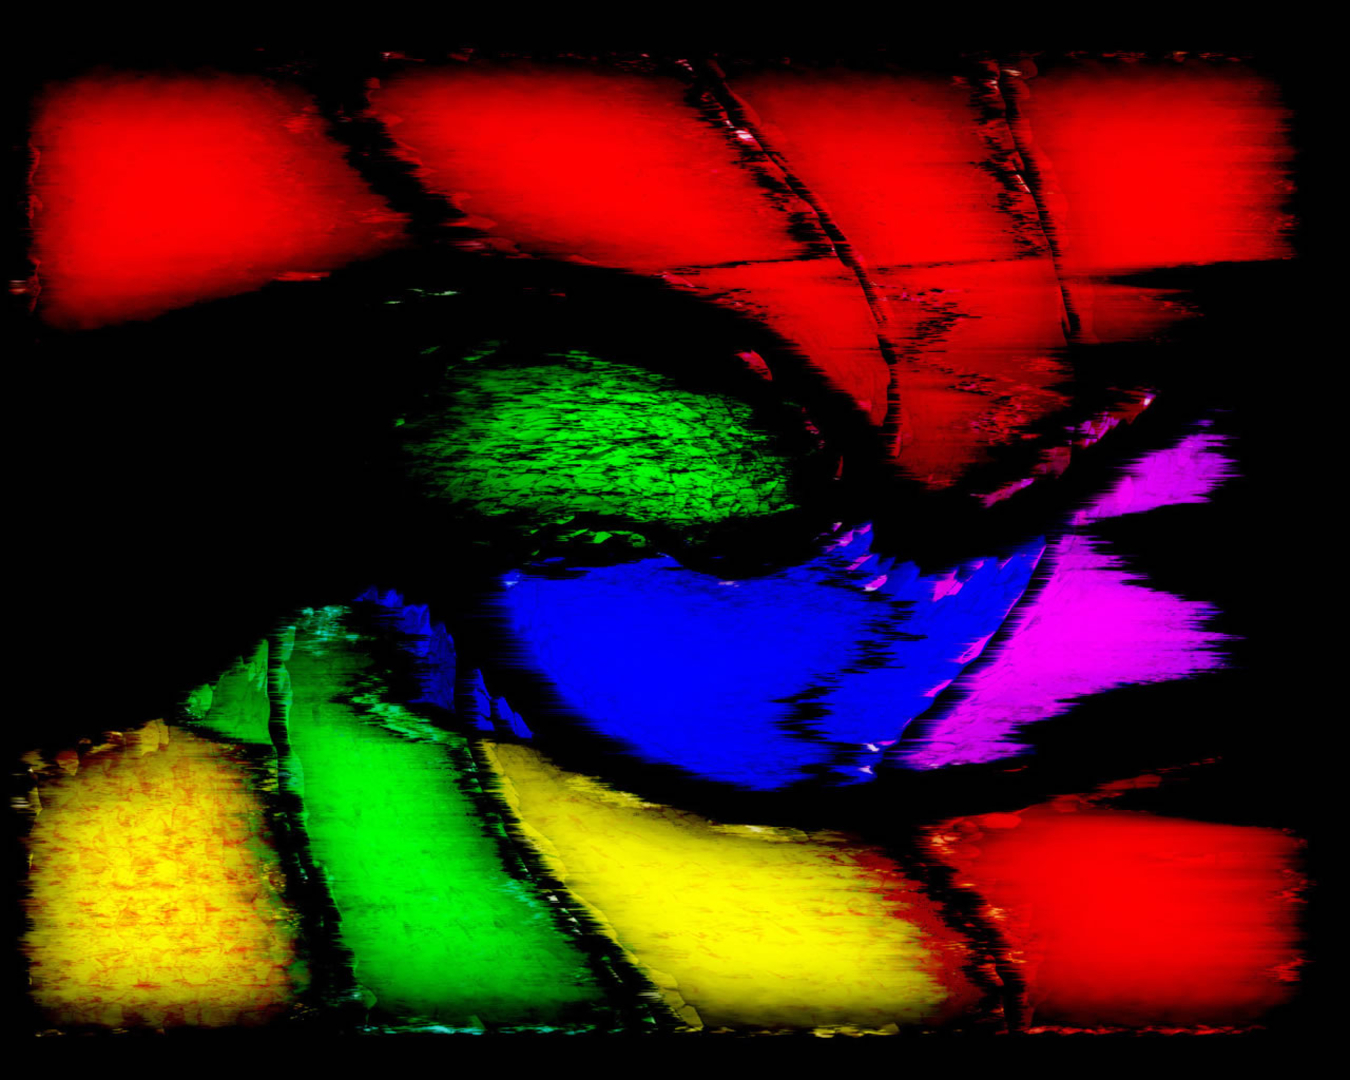 Free Download 1920x1080 Pixel Desktop Wallpapers Weird Background Desktop Hd Px 1350x1080 For Your Desktop Mobile Tablet Explore 48 1920x1080 Hd Wallpapers Bizarre Windows 10 Hd Wallpaper 1920x1080 Hd